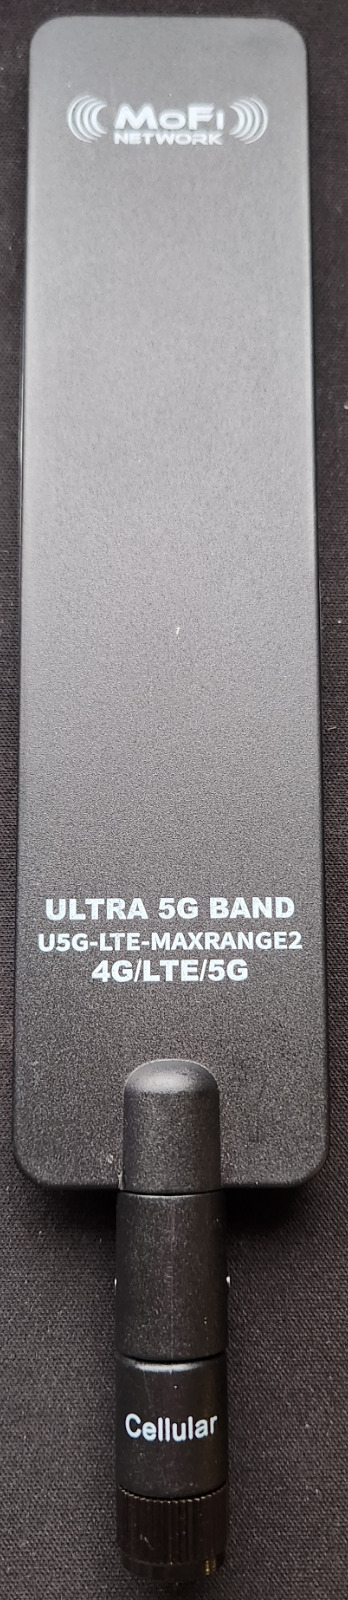 MoFi Cellular 4G/LTE/5G Antenna Wireless Antenna MOFI4500 U5G-LTE-MAXRANGE2